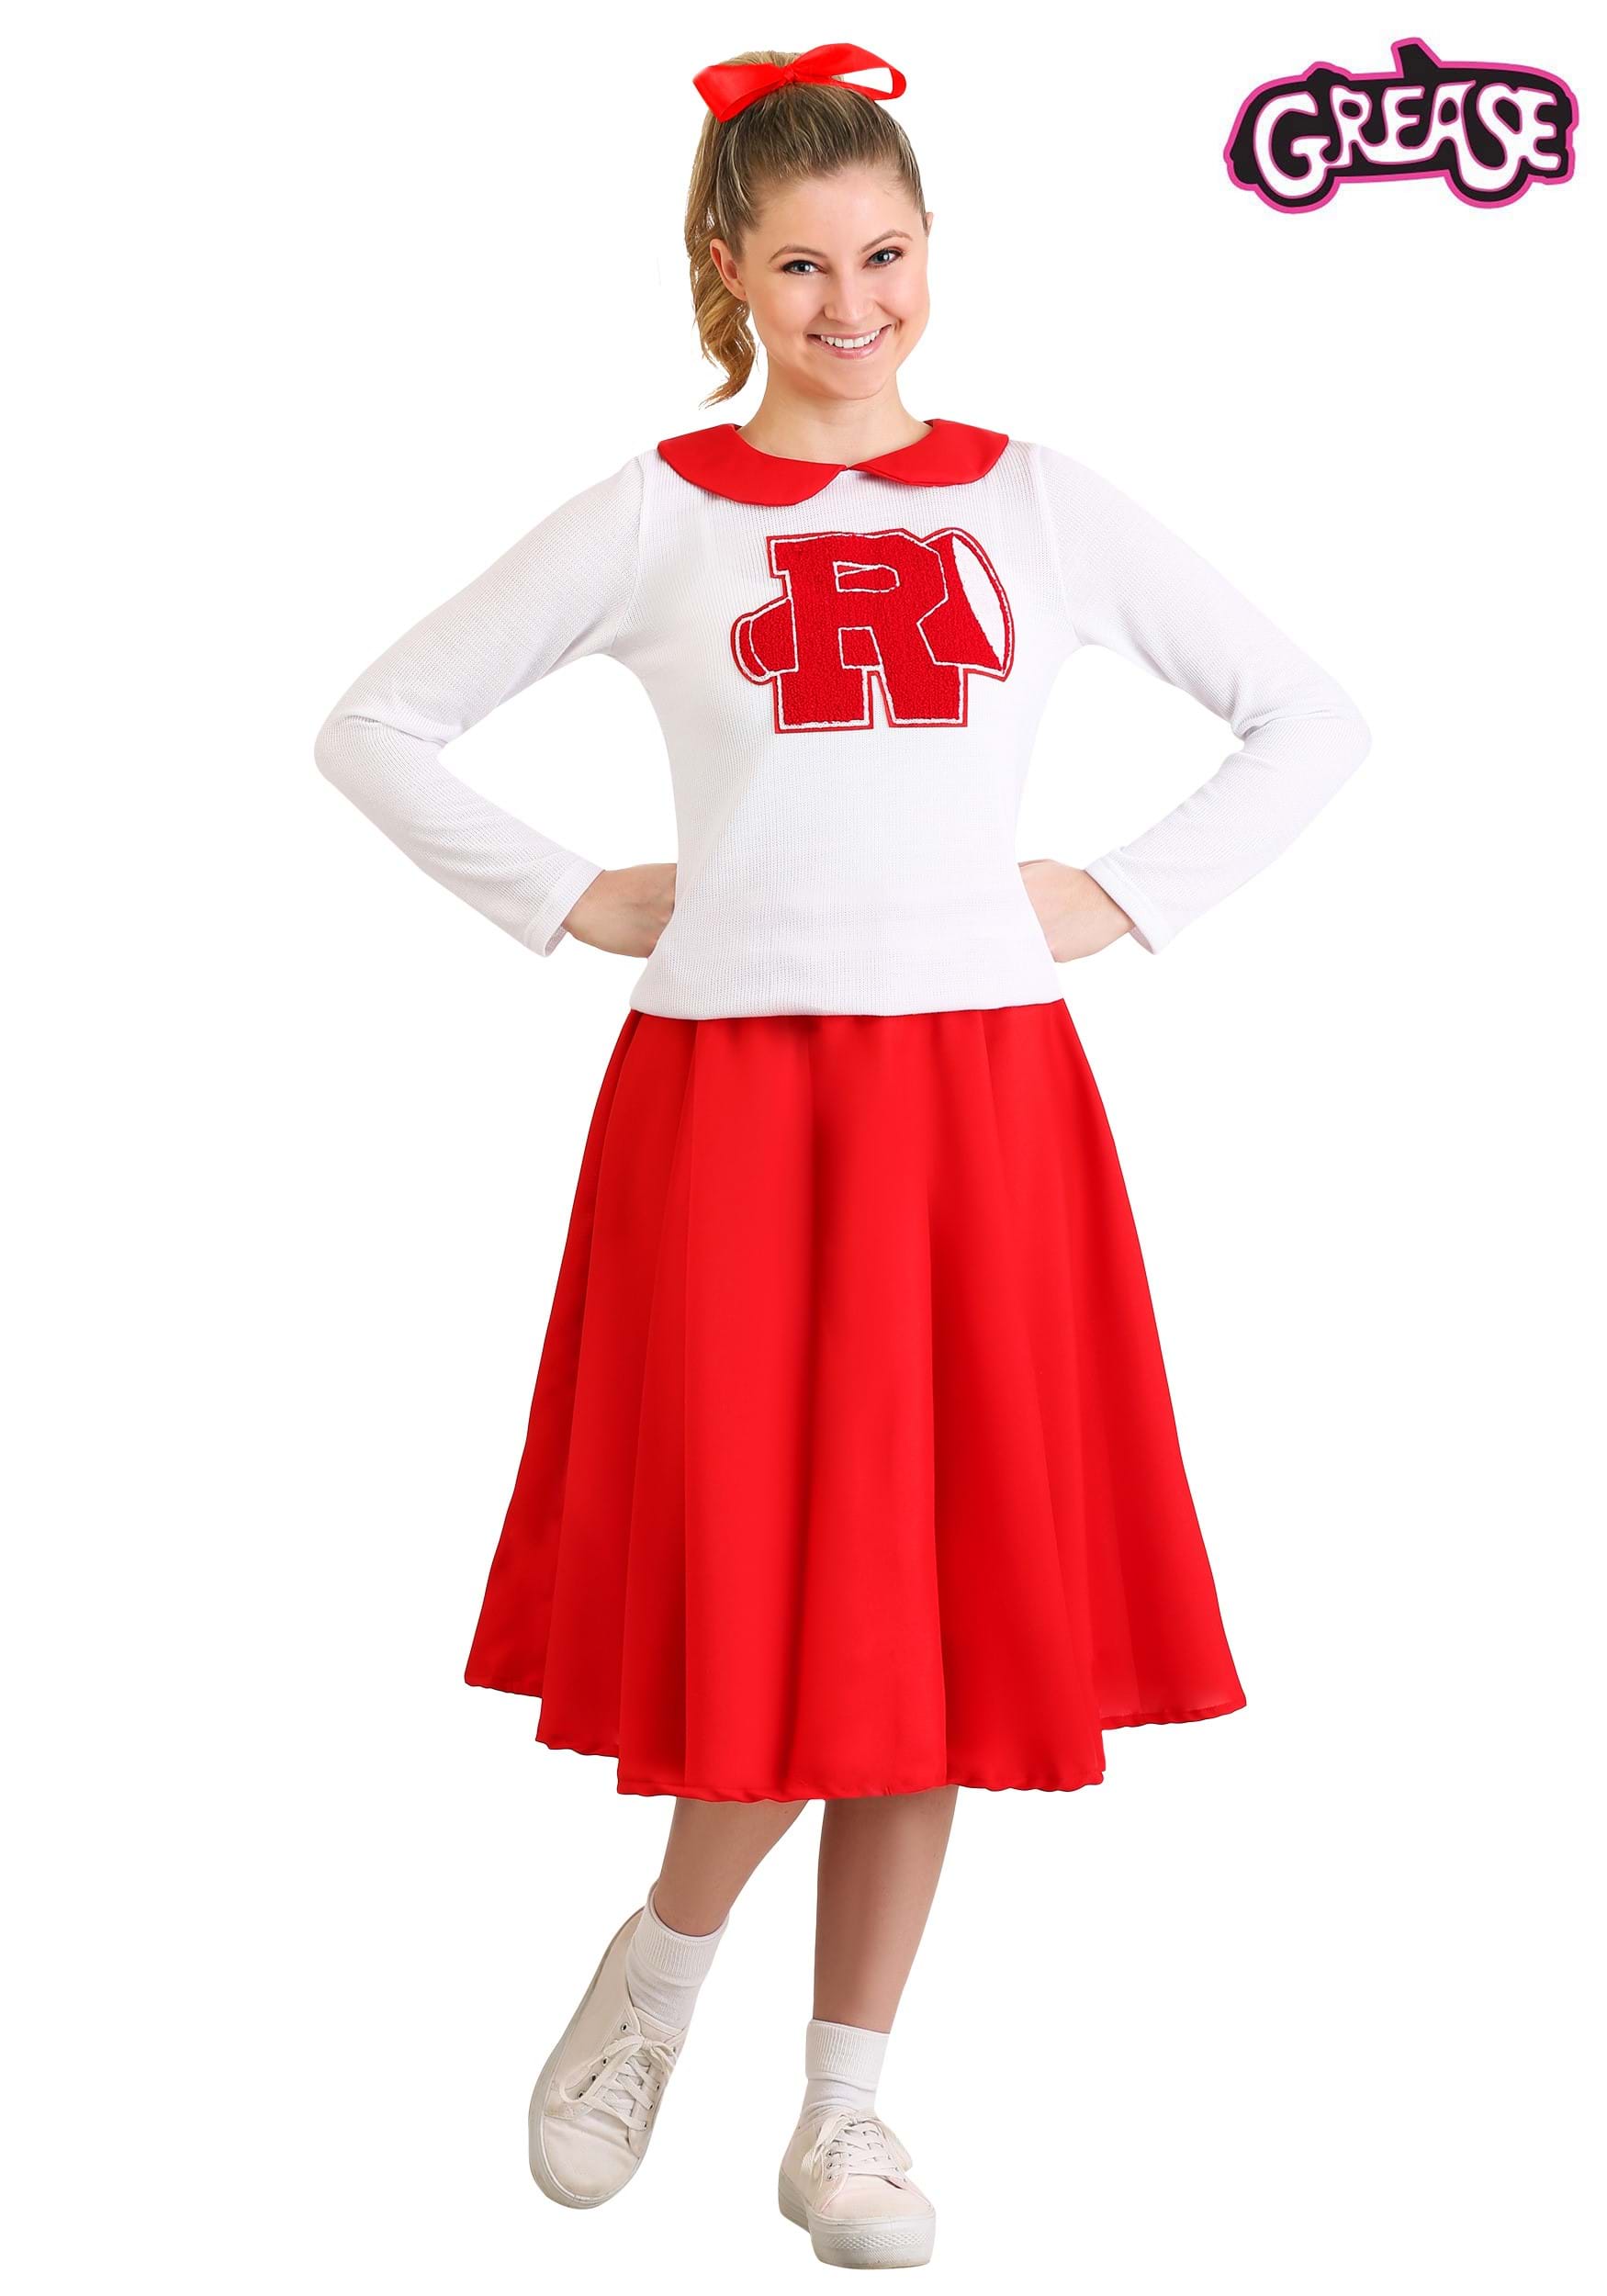 Women’s Grease Rydell High Cheerleader Costume